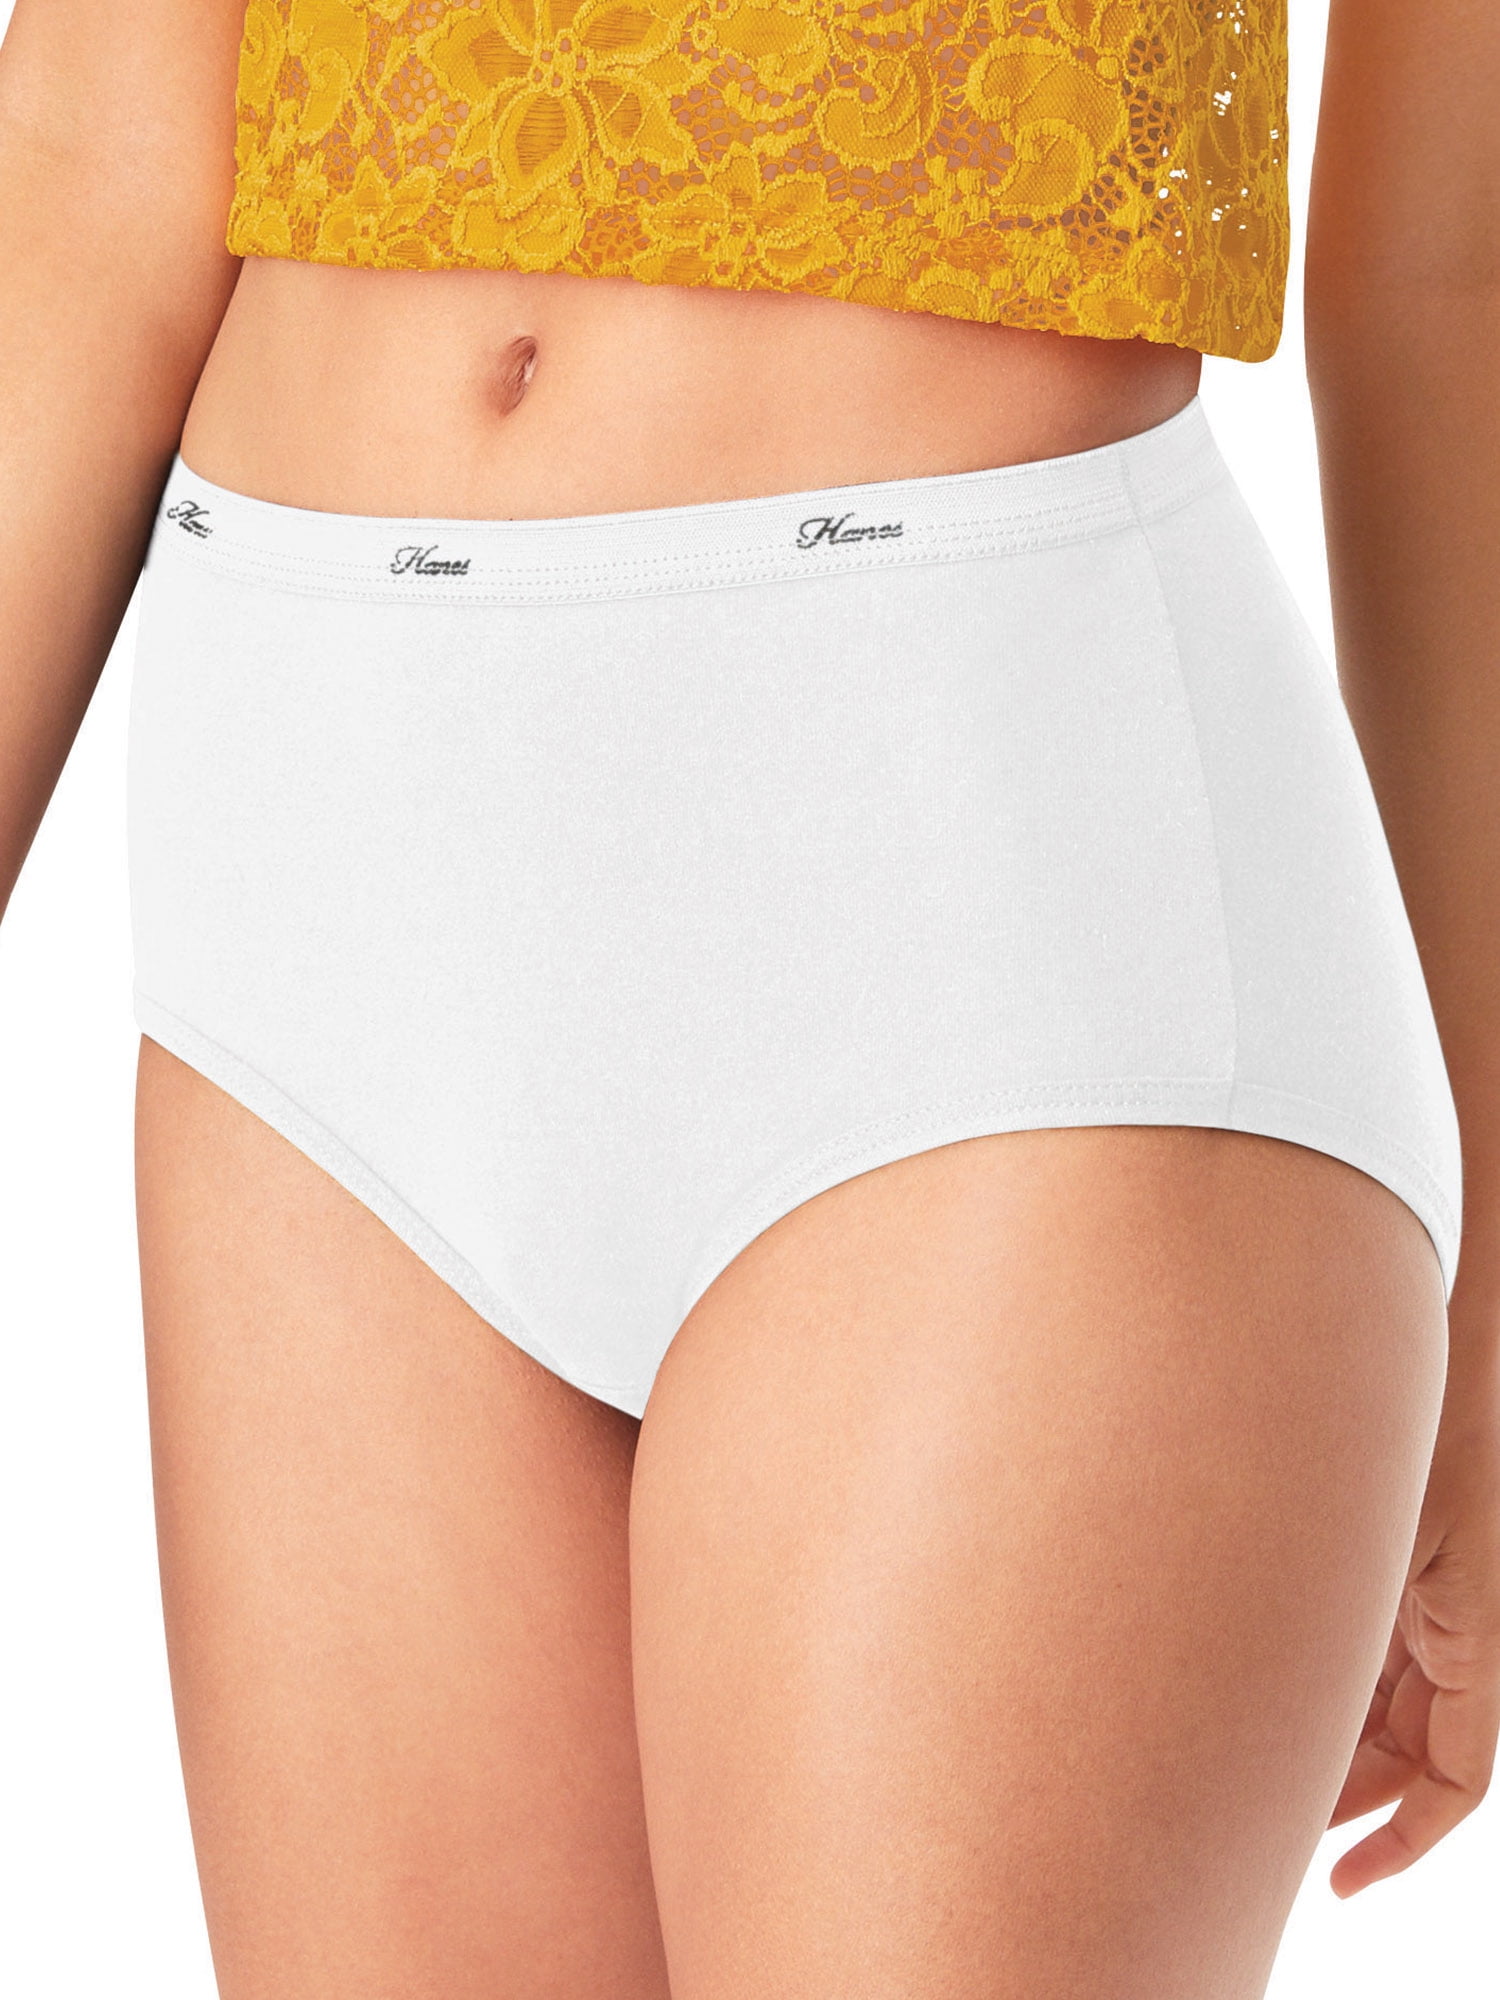 Buy Hanes Underwear Women online